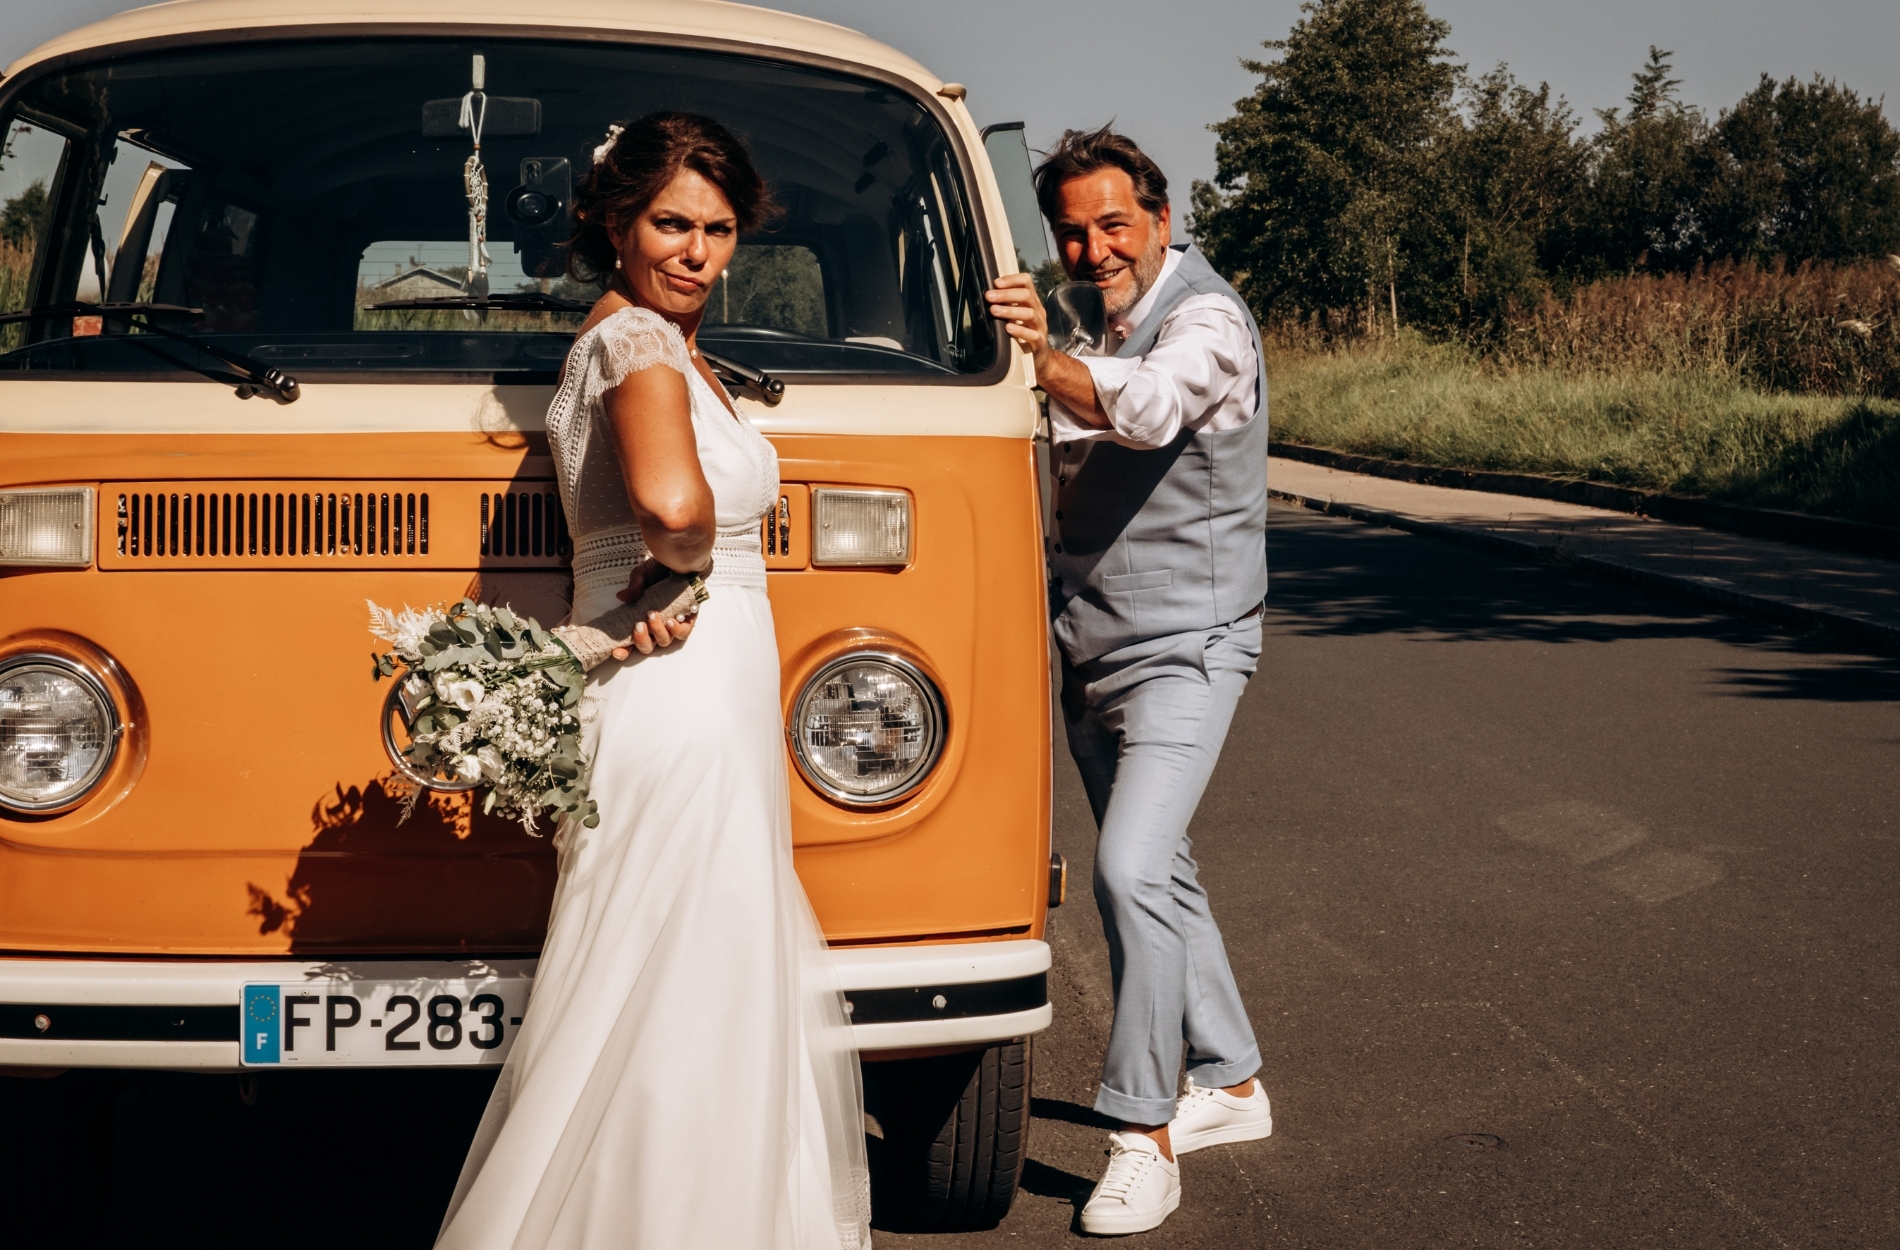 Location Combi VW mariage Pays Basque | Txiki Combi